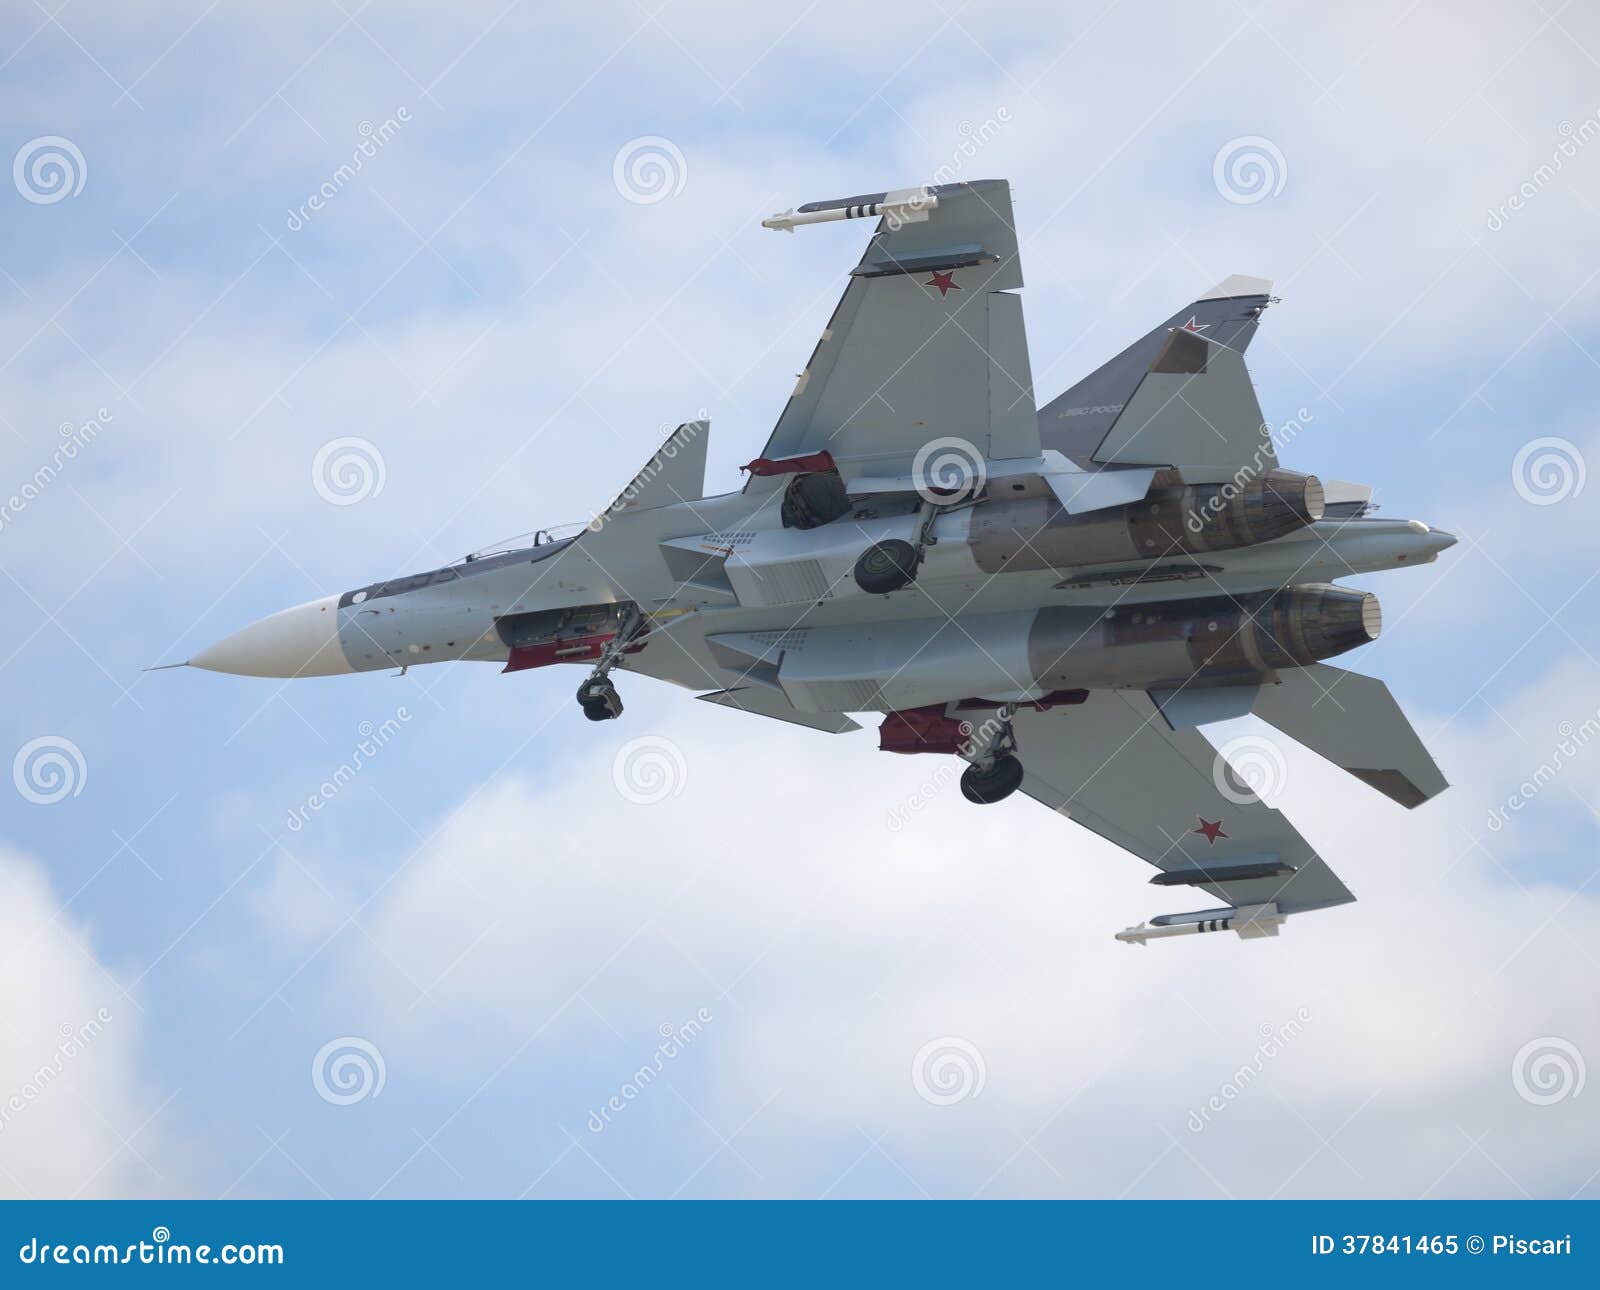 sukhoi su-30 jetfighter landing